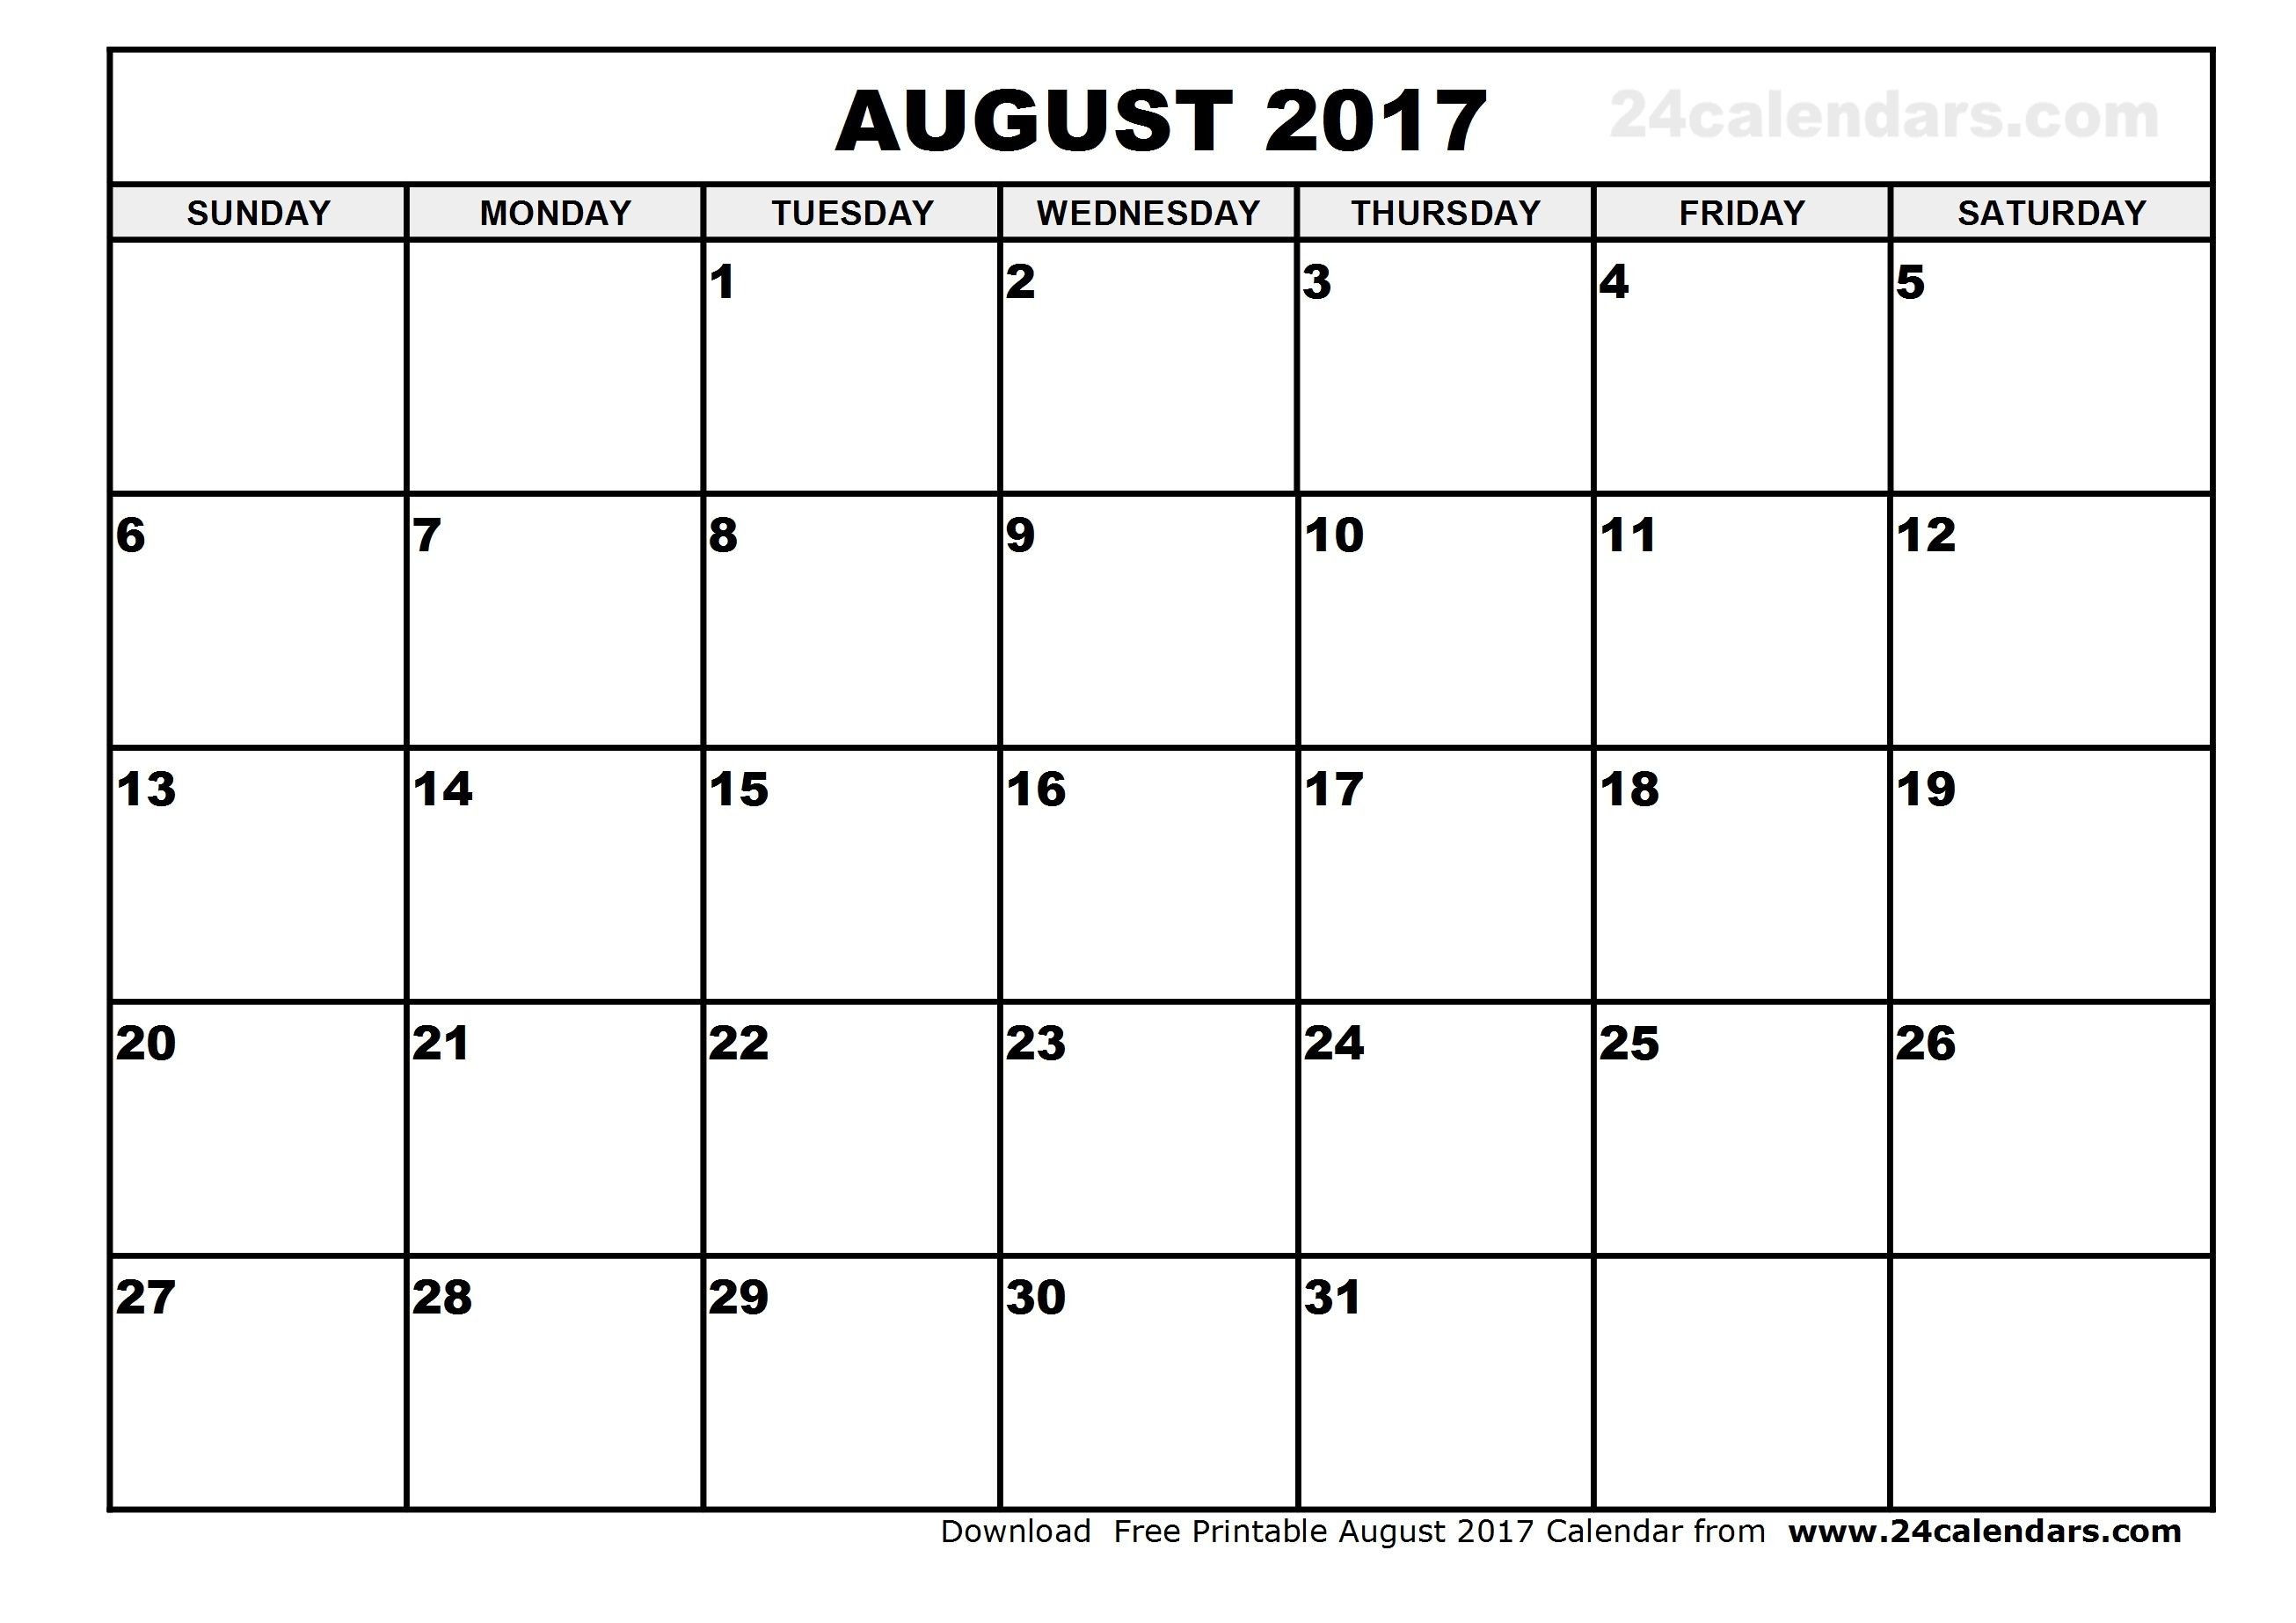 Free Calendar August 2017 | Thekpark-Hadong - Free Printable August 2017